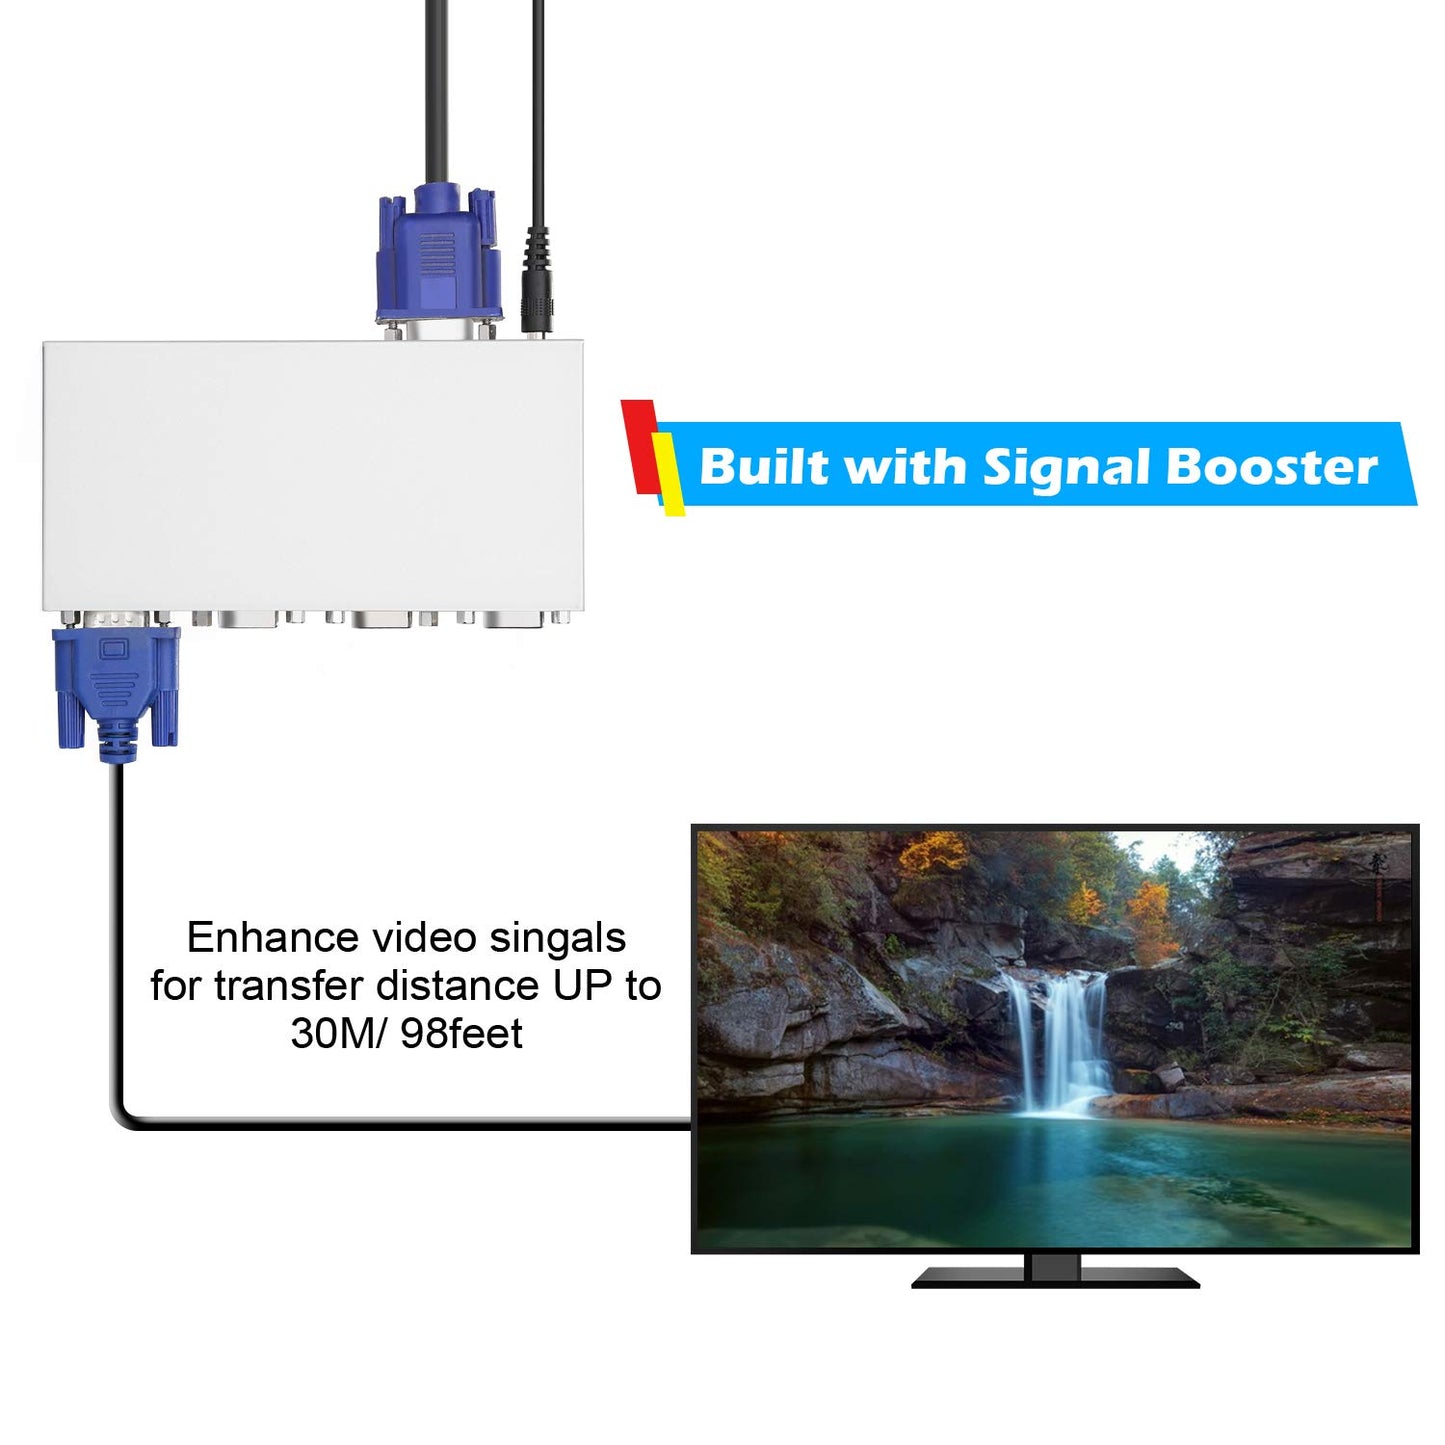 1 PC To 4 Monitors Splitter Box VGA/SVGA LCD CRT 4 Port Video